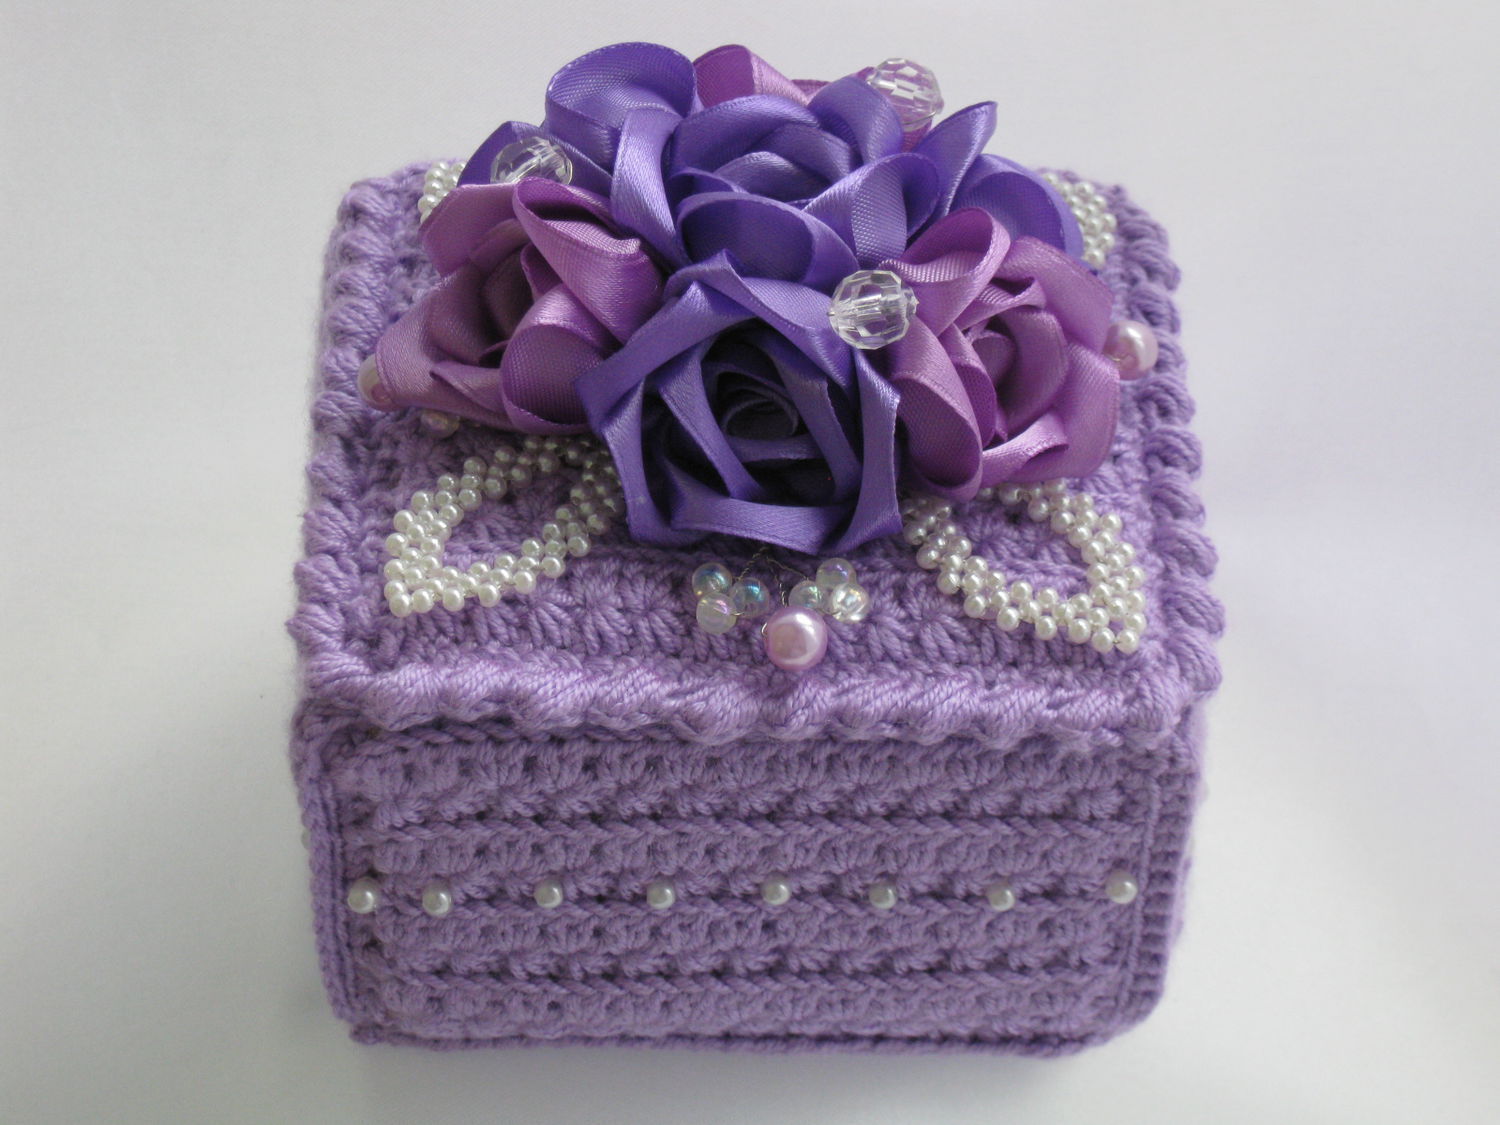 hiasan kotak crochet